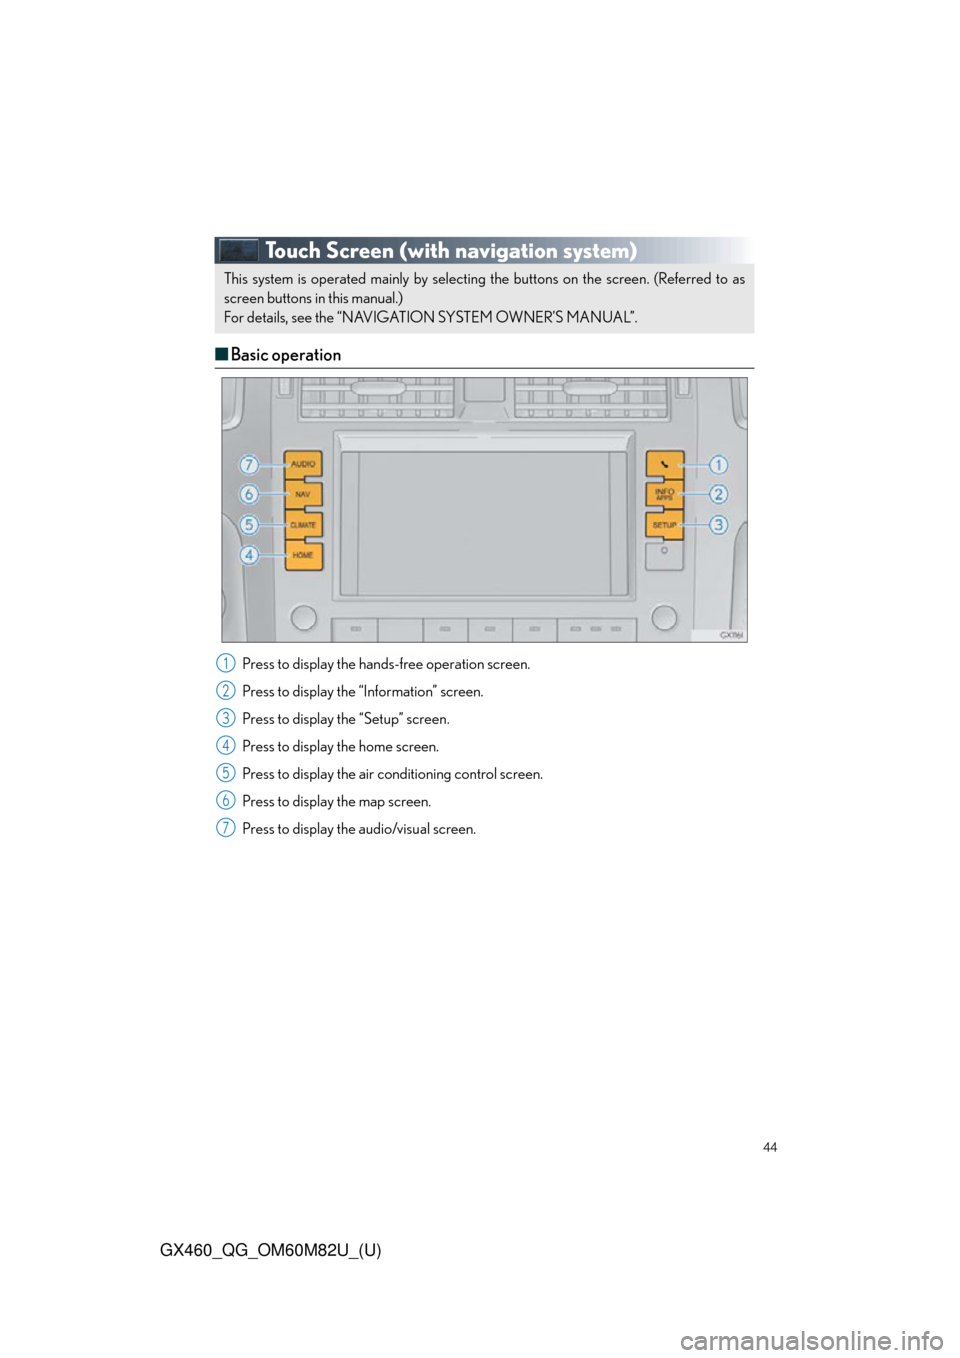 Lexus GX460 2016  Navigation Manual / LEXUS 2016 GX460  QUICK GUIDE (OM60M82U) Service Manual 44
GX460_QG_OM60M82U_(U)
Touch Screen (with navigation system)
■Basic operation
Press to display the hands-free operation screen.
Press to display the  “Information” screen.
Press to display the